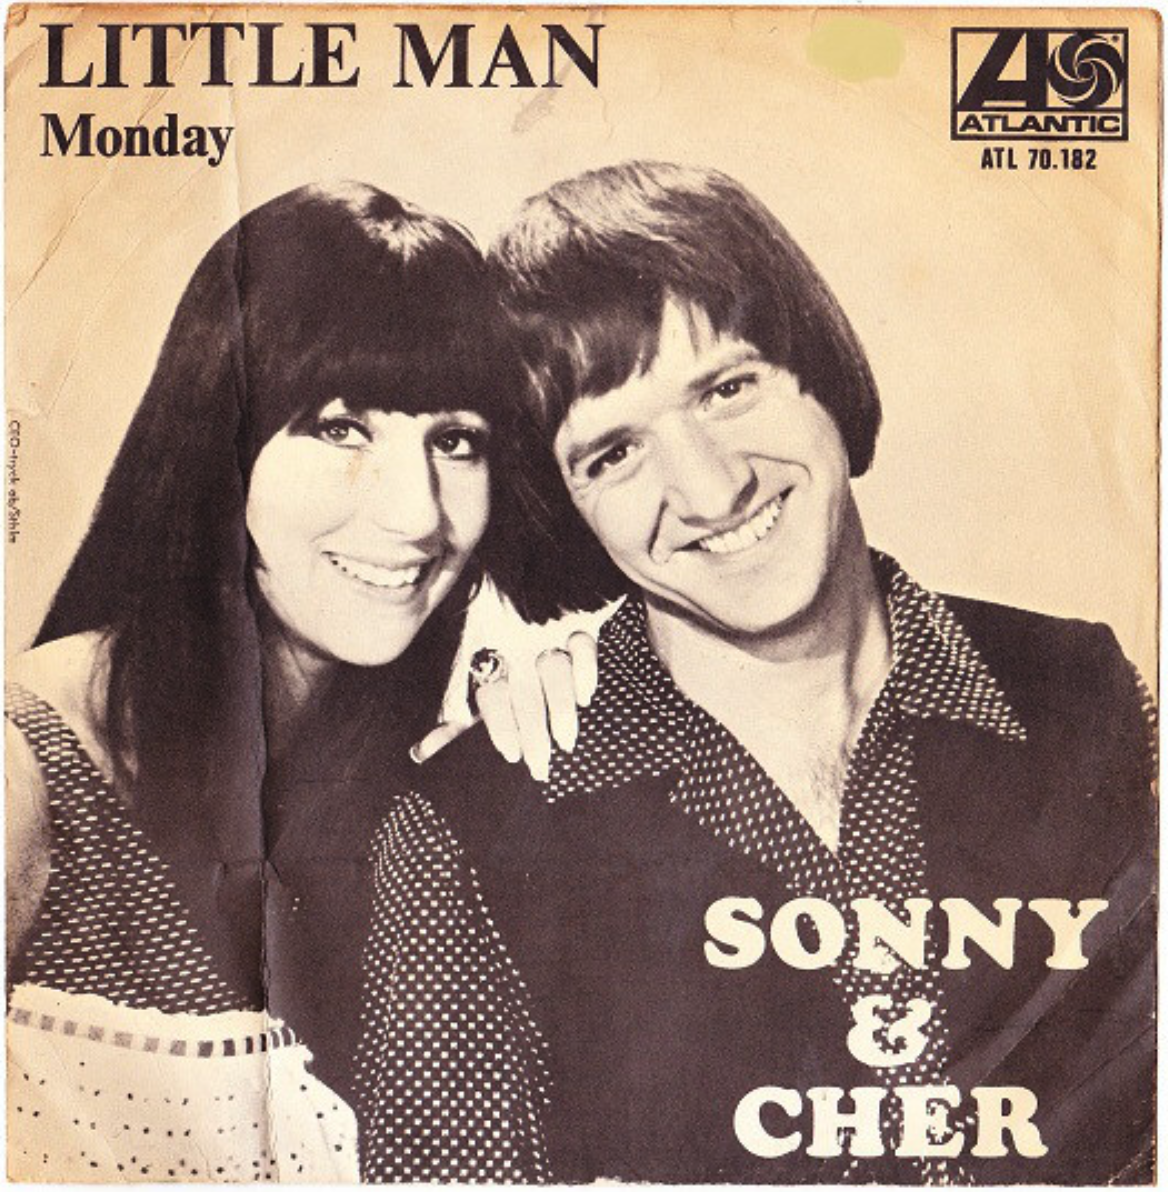 Шер и сони песни. Sonny - cher - little man 1966г. "Сонни и Шер" ("Sonny & cher"). Cher little man 1966. Sonny cher 1966 года little man.